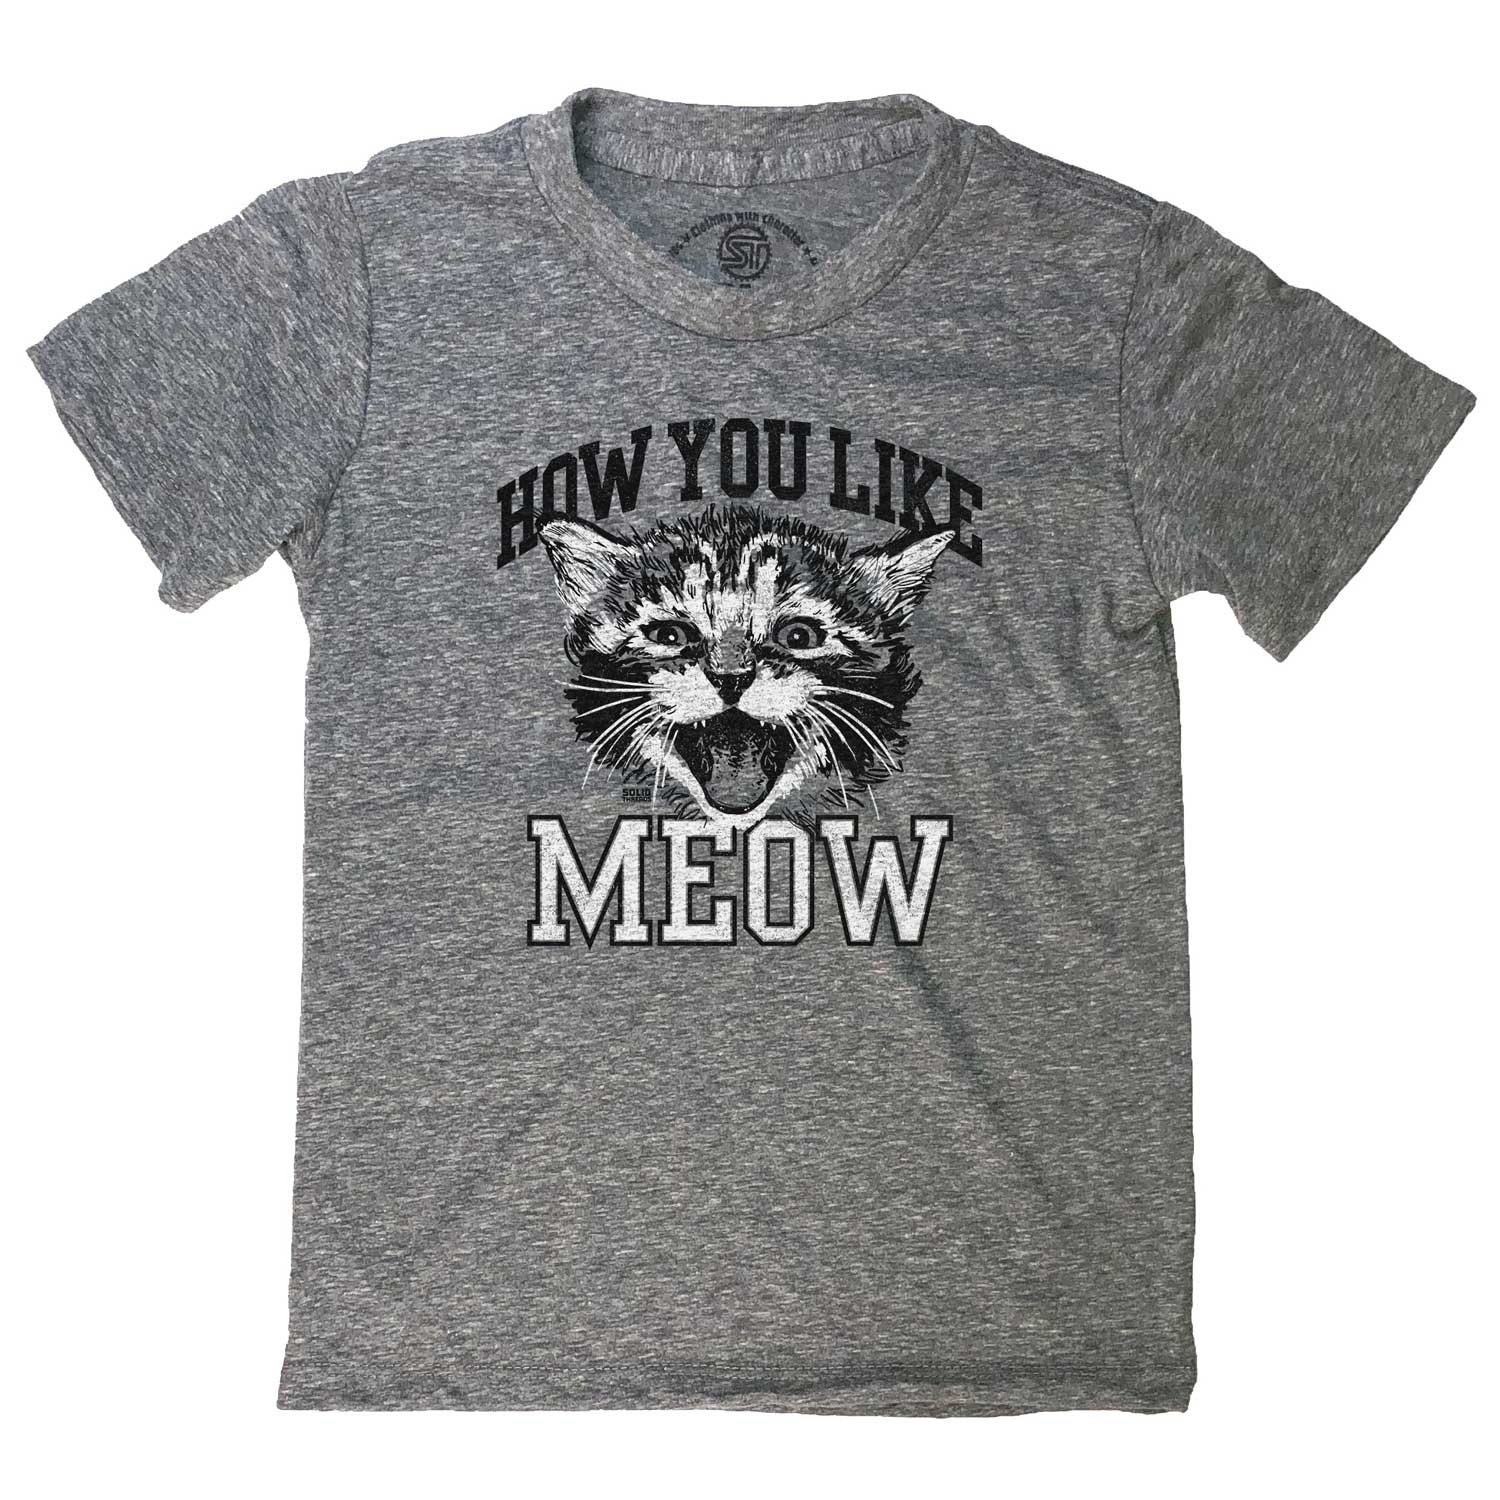 Organic cotton t-shirt for men with fun meme 'TOLD YOU SO' – PROUD TO BE ME  fashion